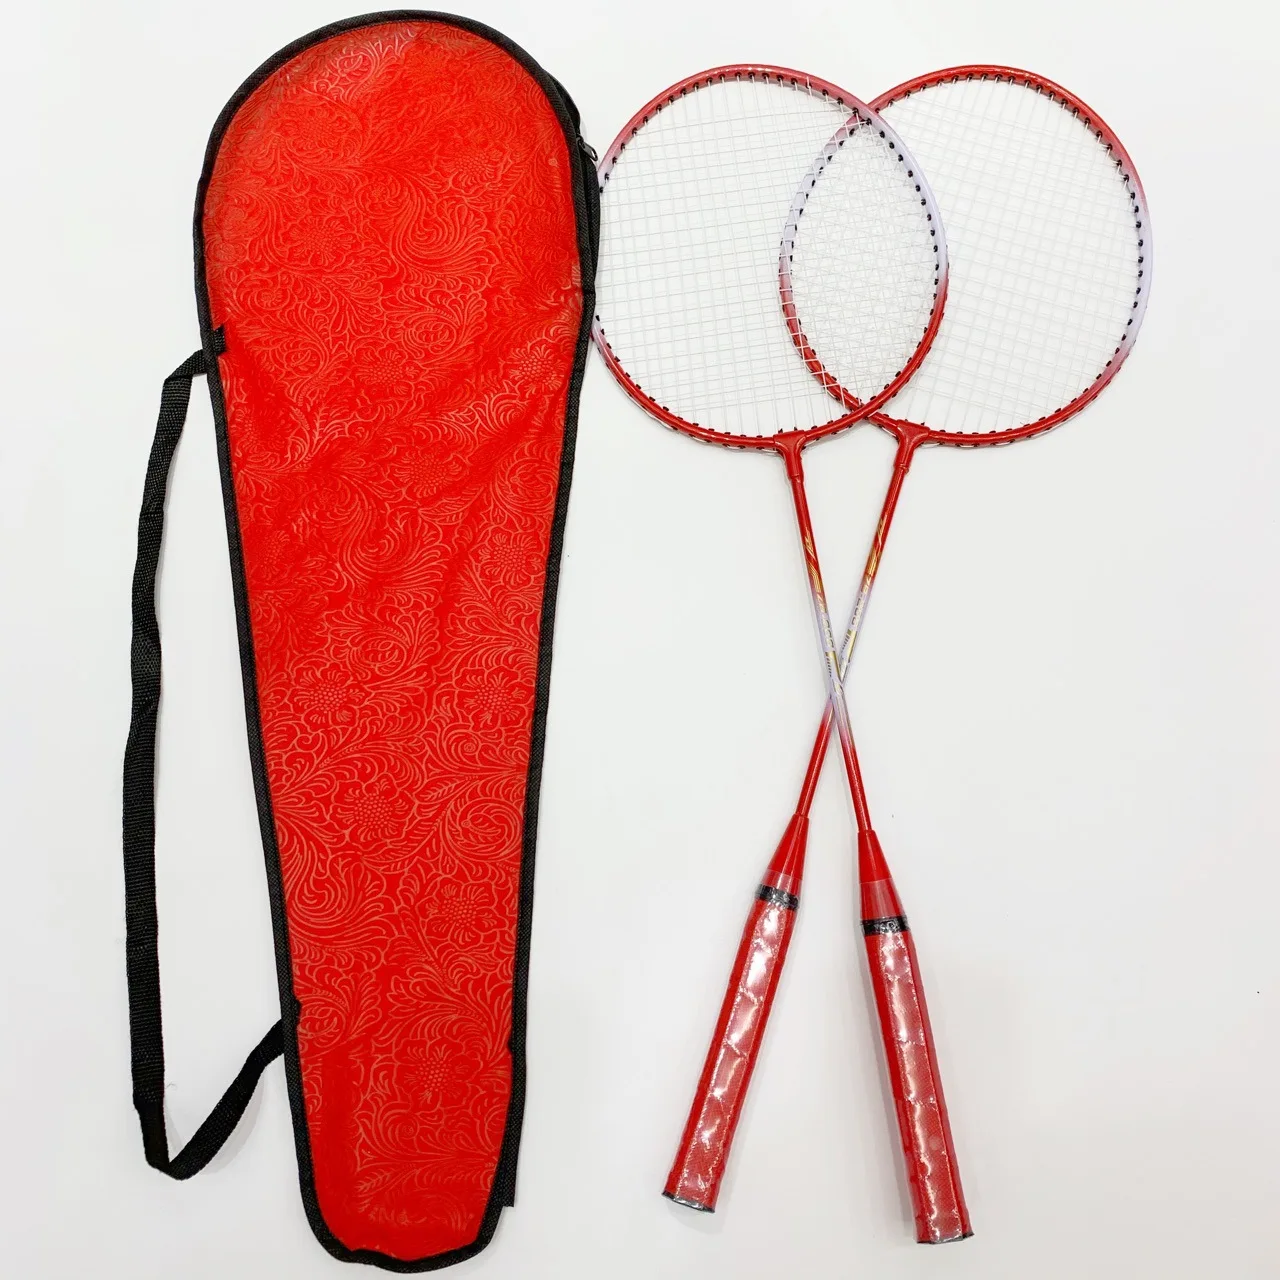 

2Pcs Pair Professional 20Lbs Badminton Racket And Carrying Bag Set Indoor Outdoor Badminton Racket Set -40, Purple,red